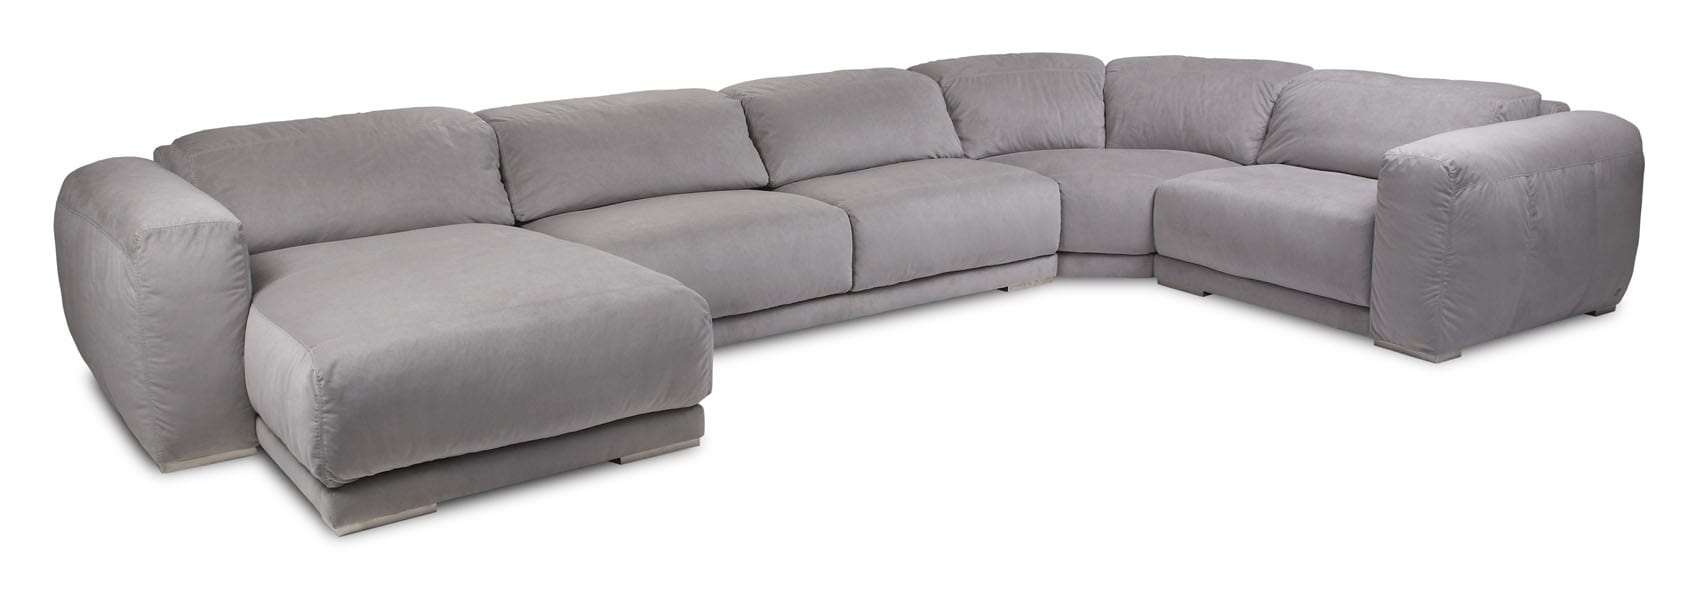 american leather malibu sofa